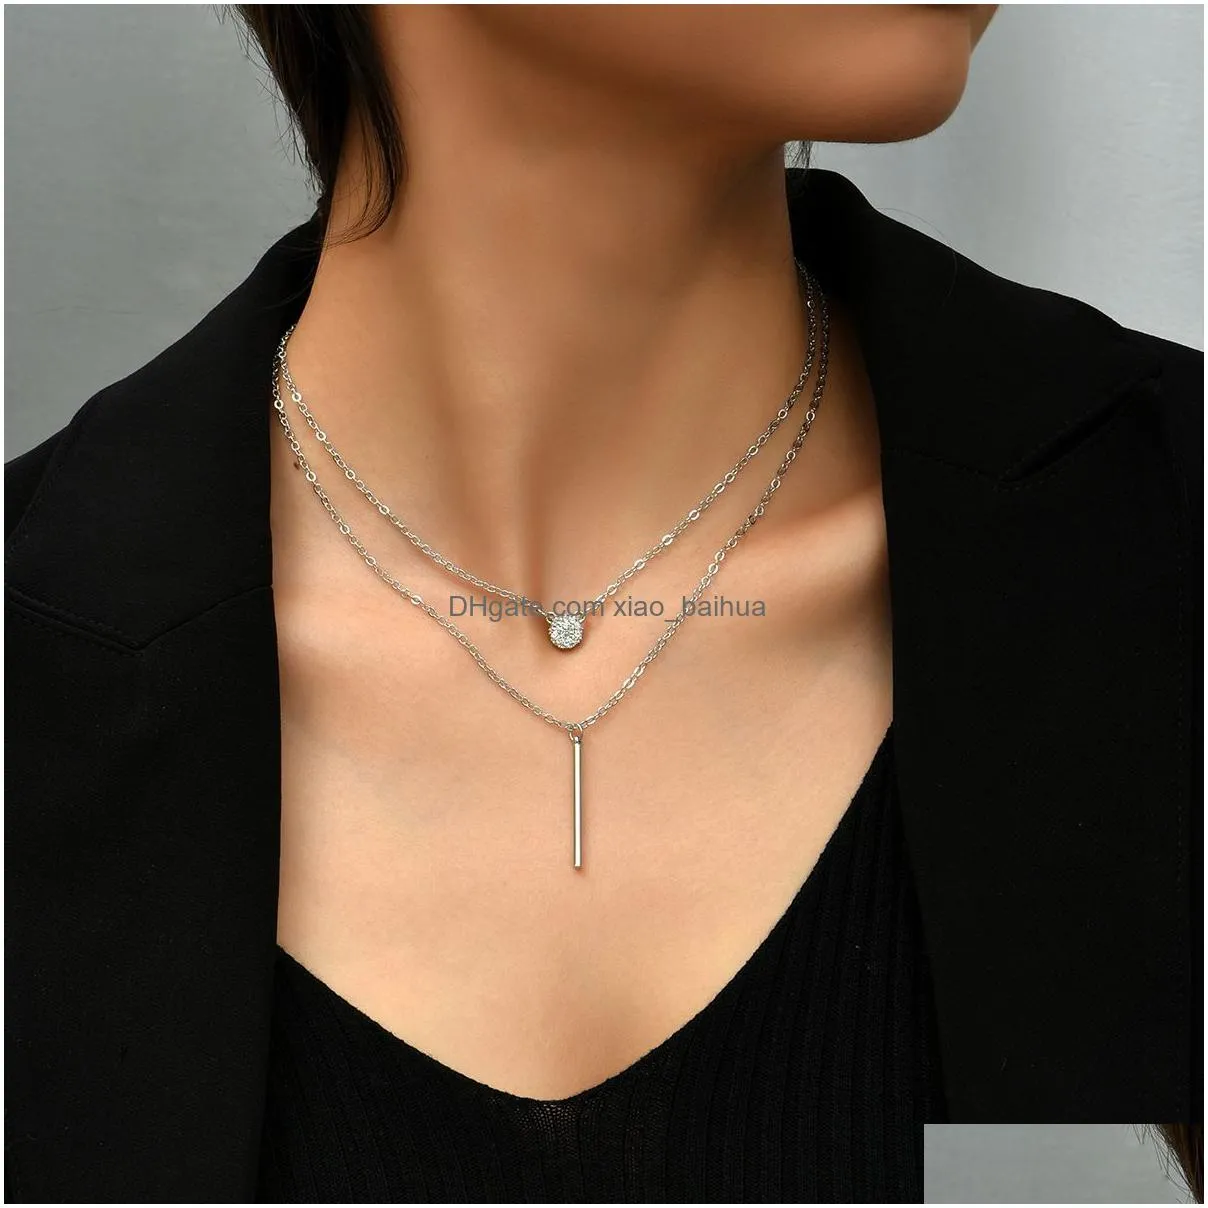 double zircon pendant necklace female niche temperament metal rod titanium steel clavicle chain accessories